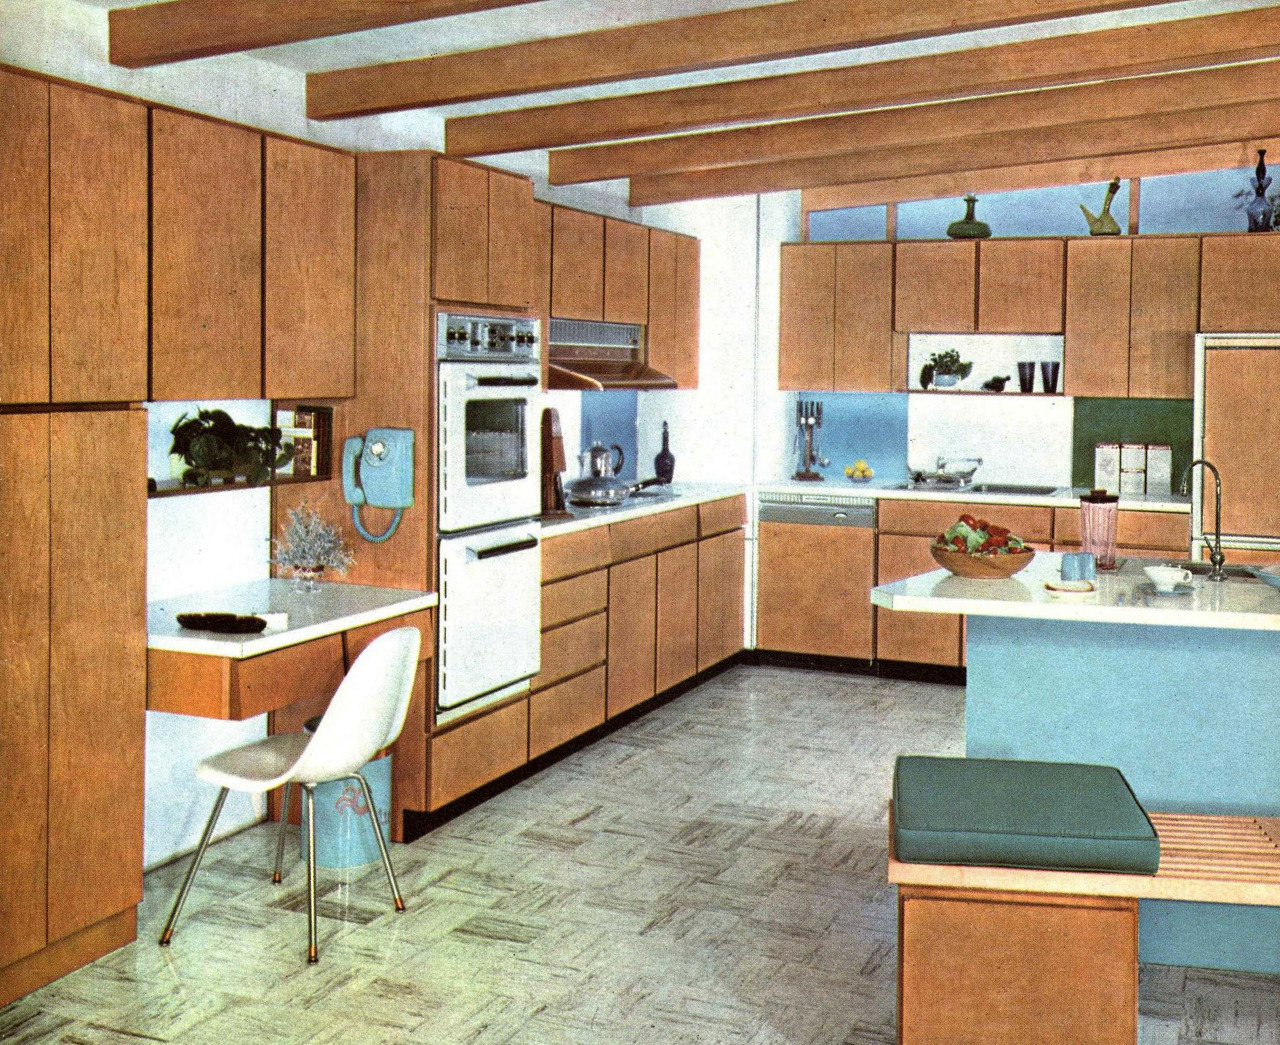 1960 kitchen wall art